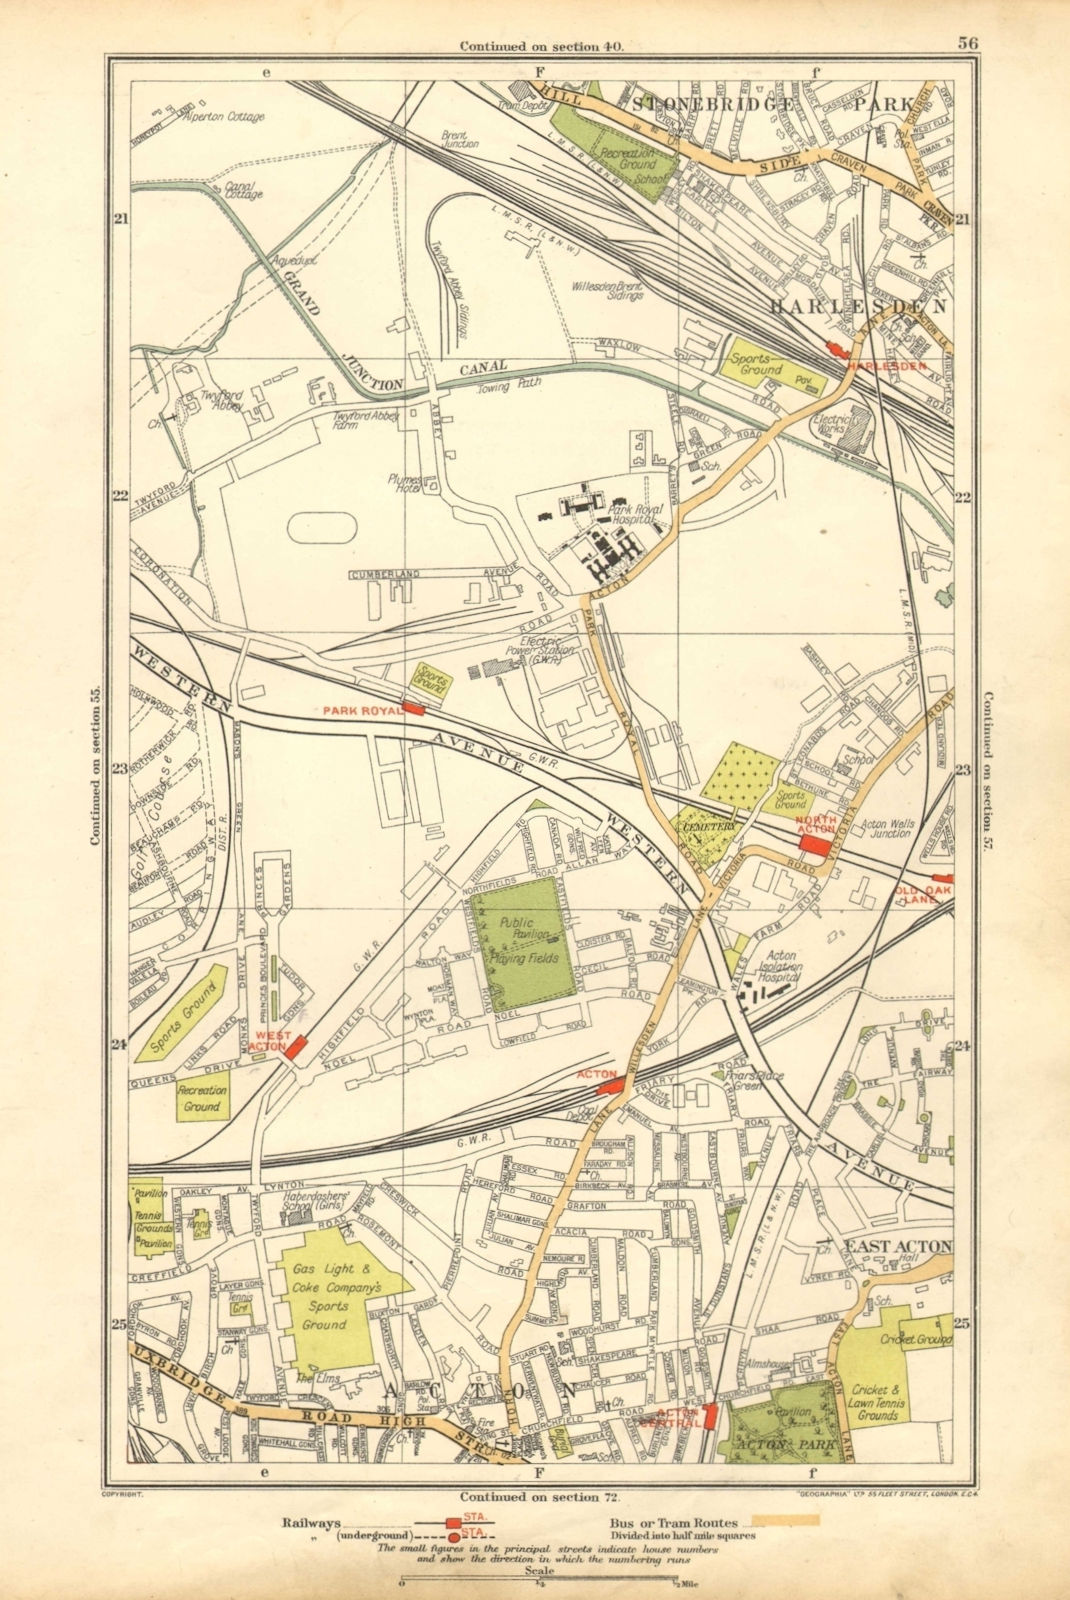 ACTON. Park Royal, Stonebridge Park, Harlesden, Old Oak Lane 1928 map